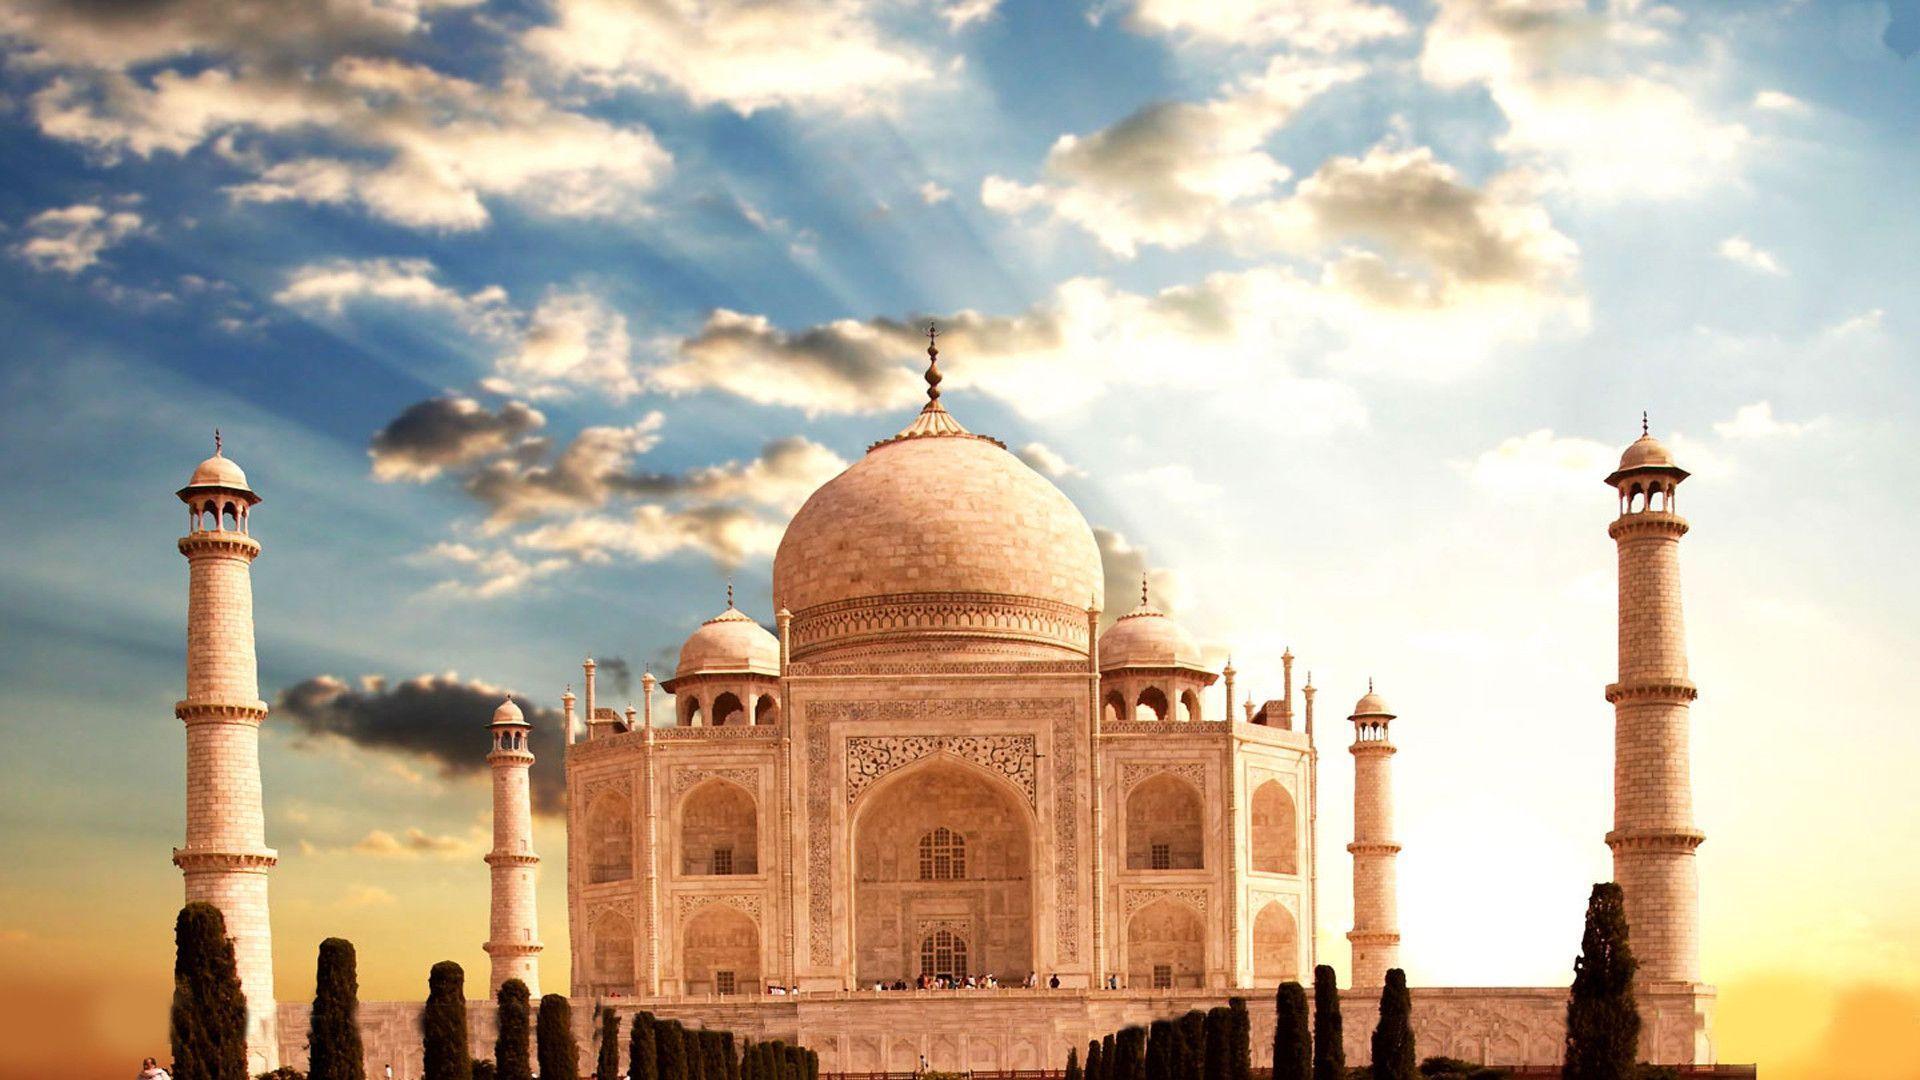 HD Taj Mahal [hd 1080p] Super Sharp Wallpaper